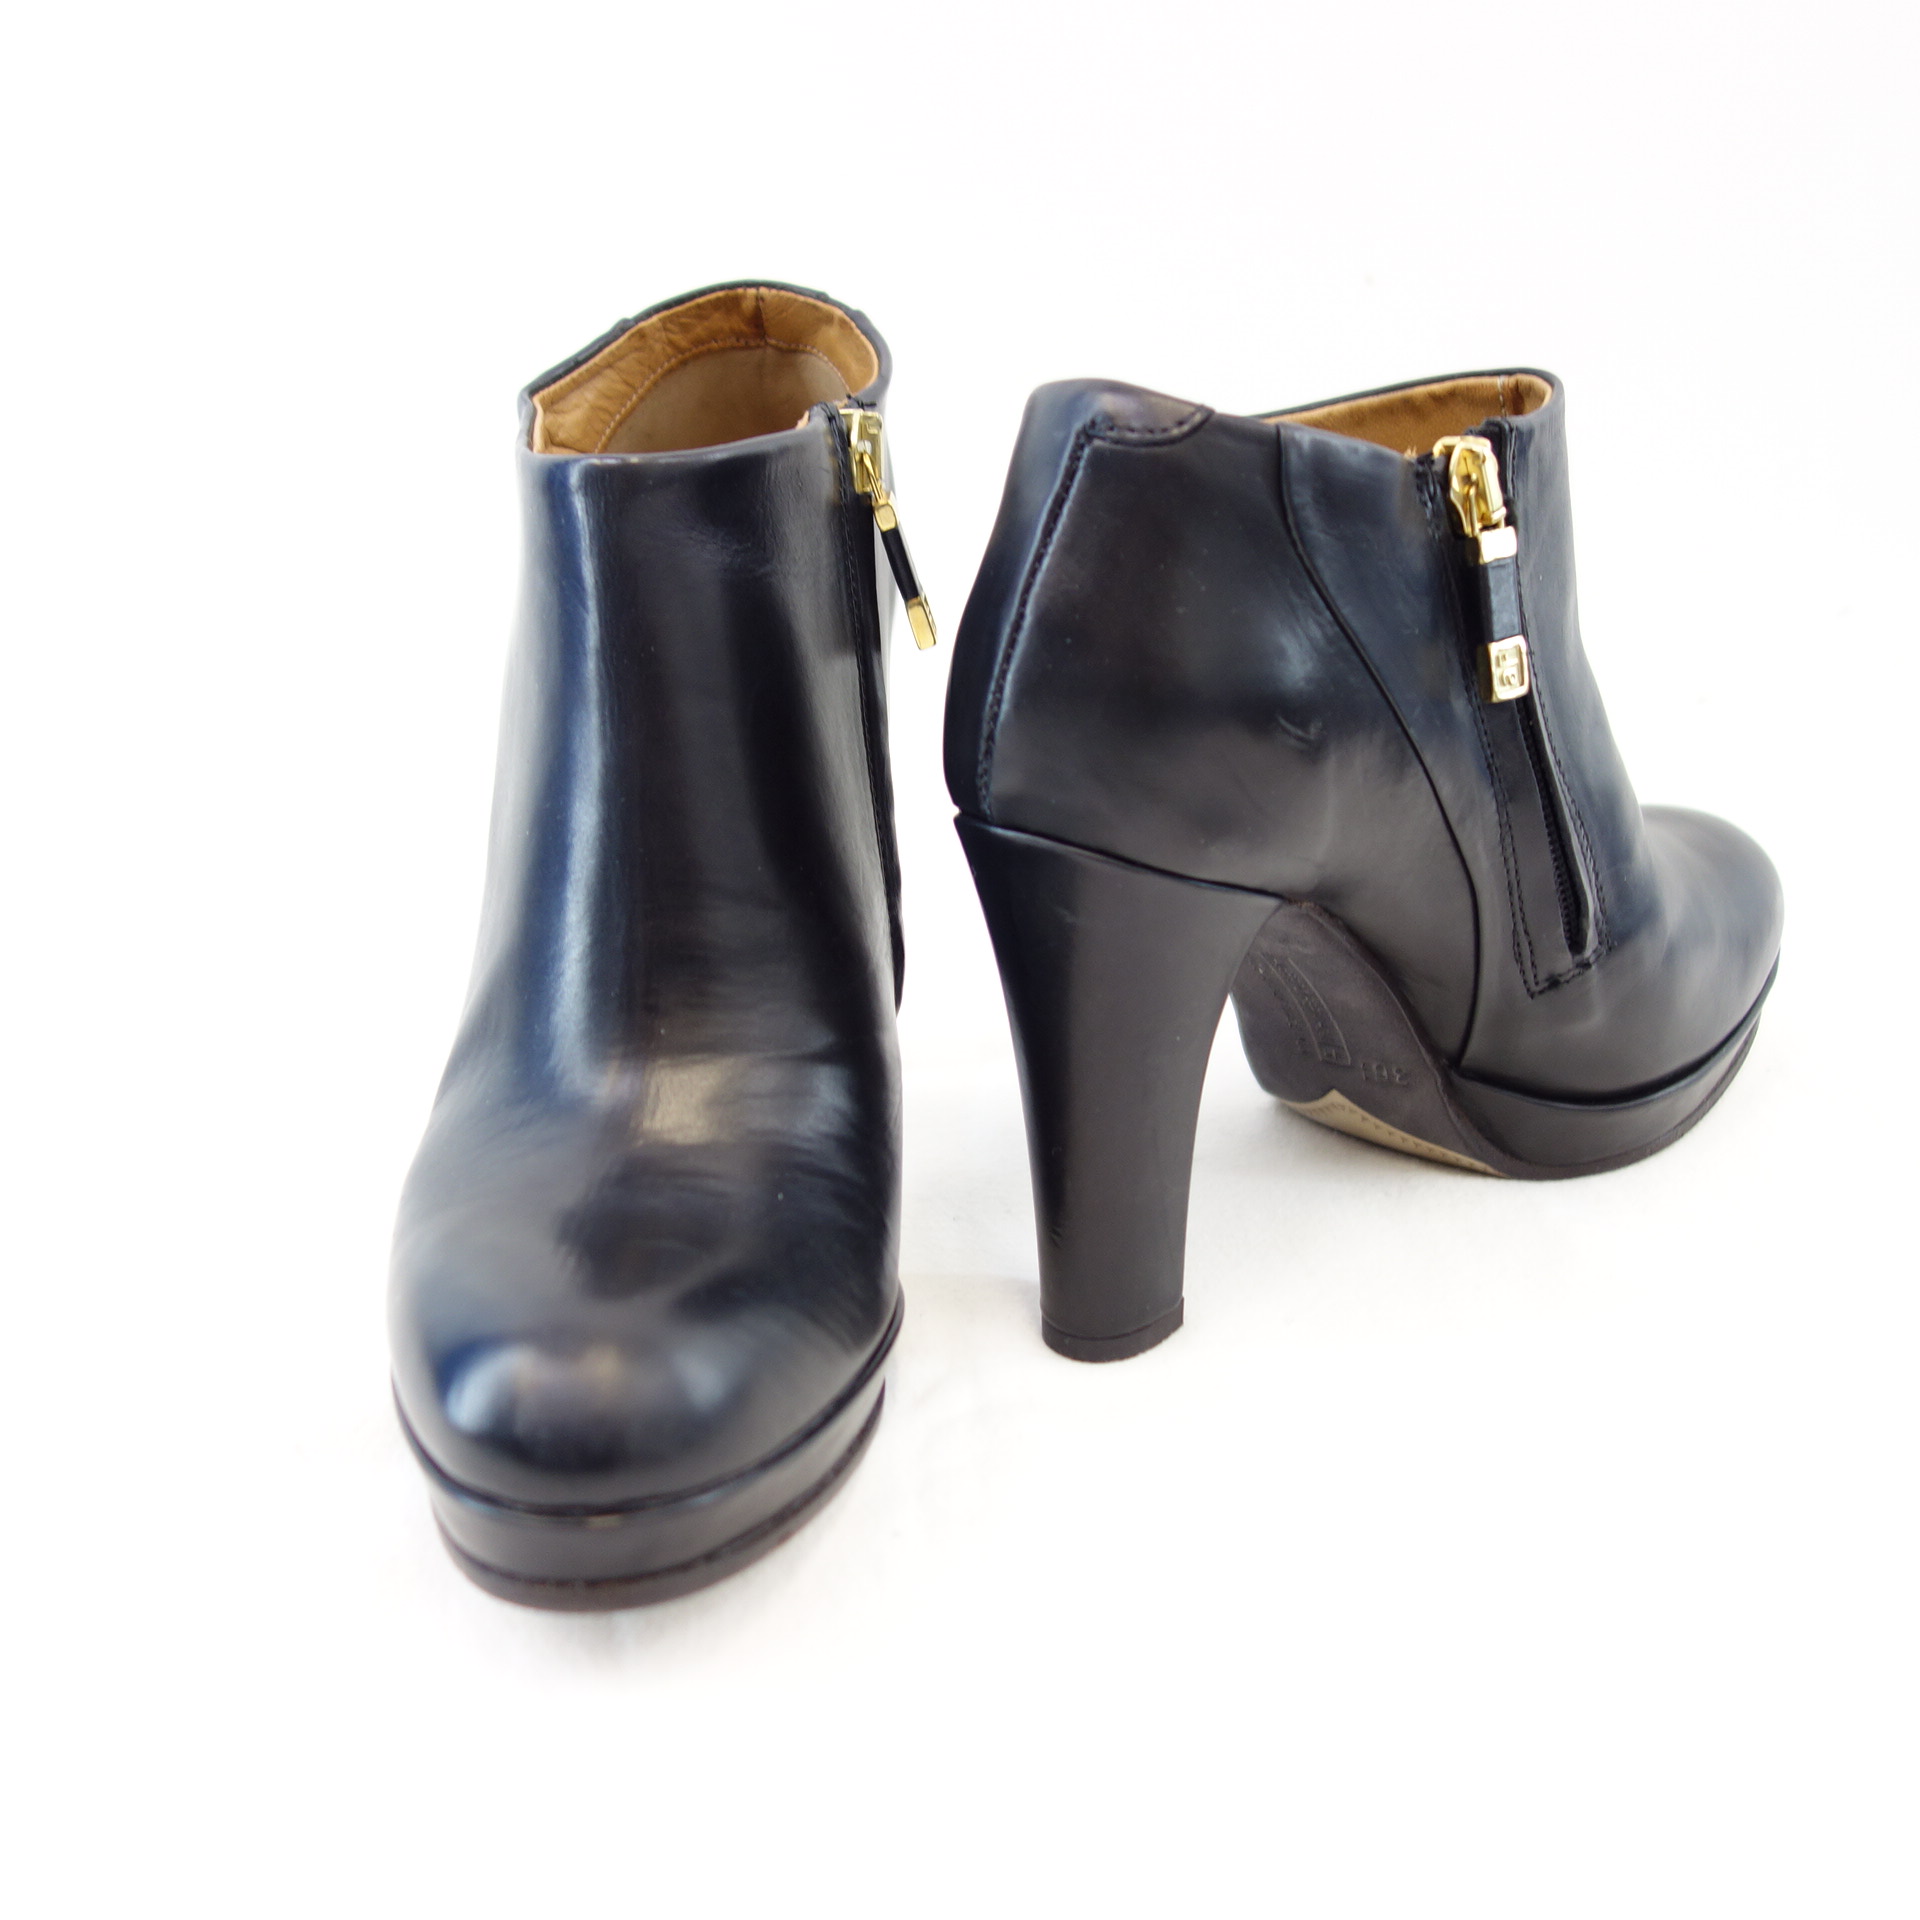 ALBERTO FERMANI Damen Schuhe Ankle Boots Stiefeletten Pumps Leder Schwarz 36,5 Np  229 Neu